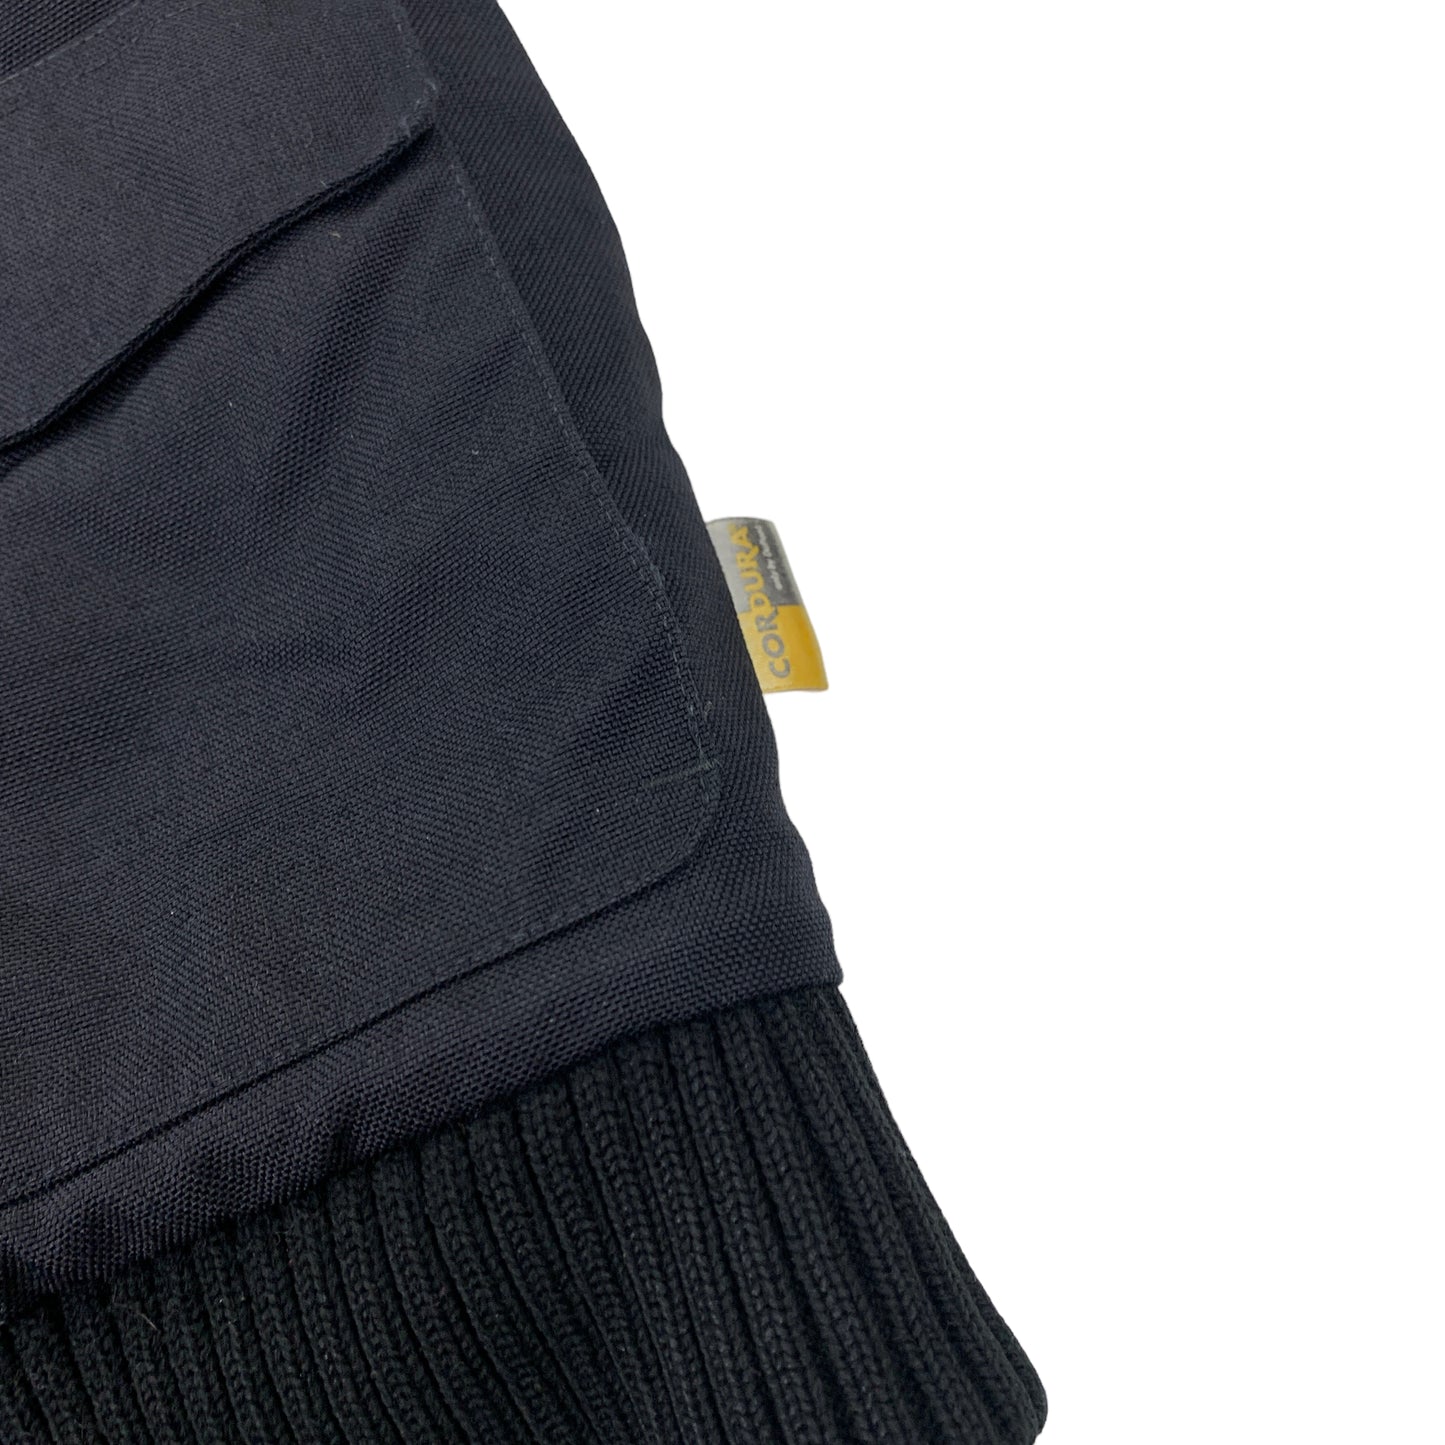 Carhartt Jacket (black) Workwear Bomber - M